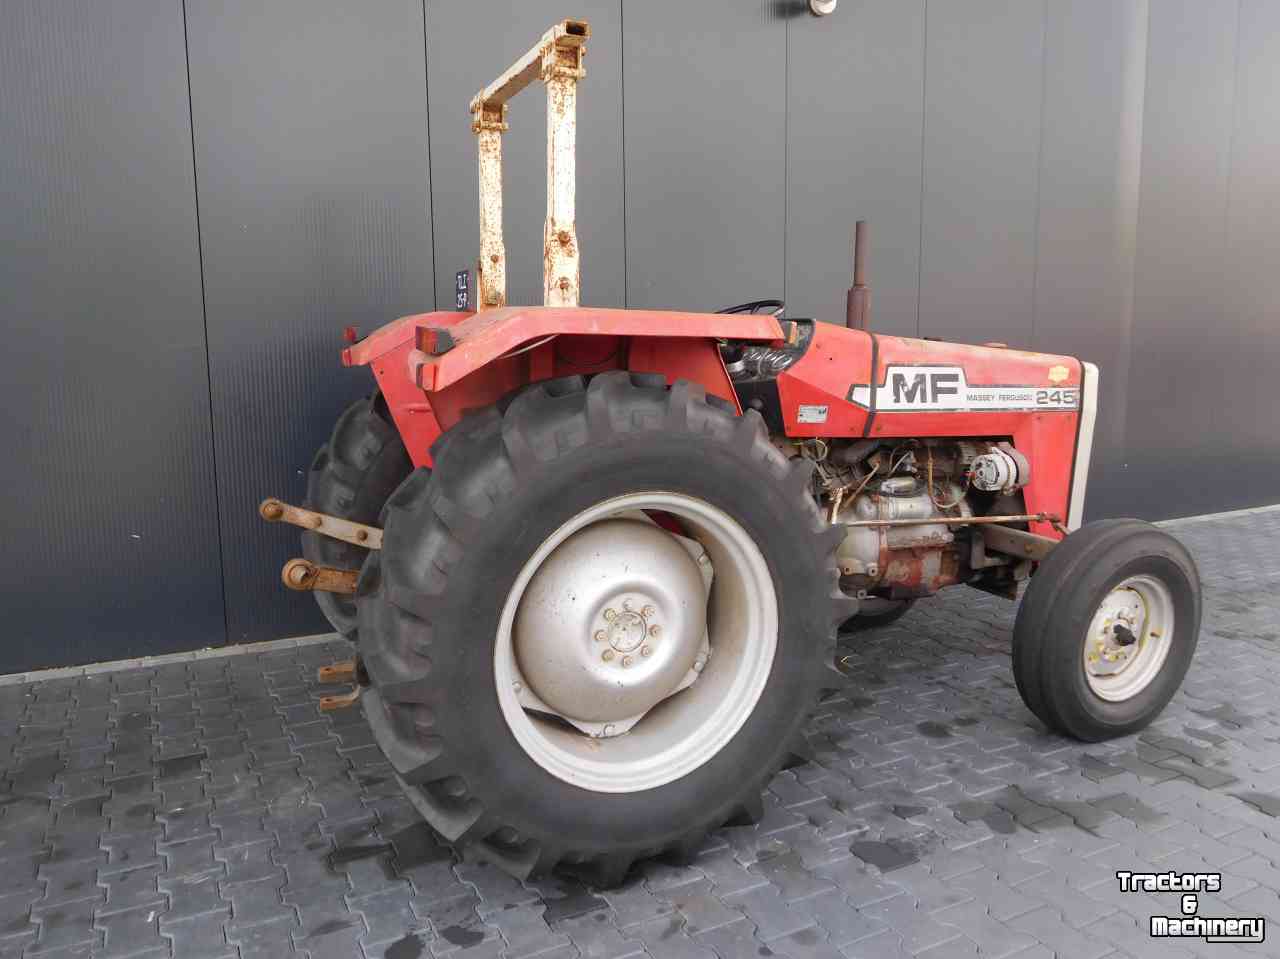 Tractors Massey Ferguson 245